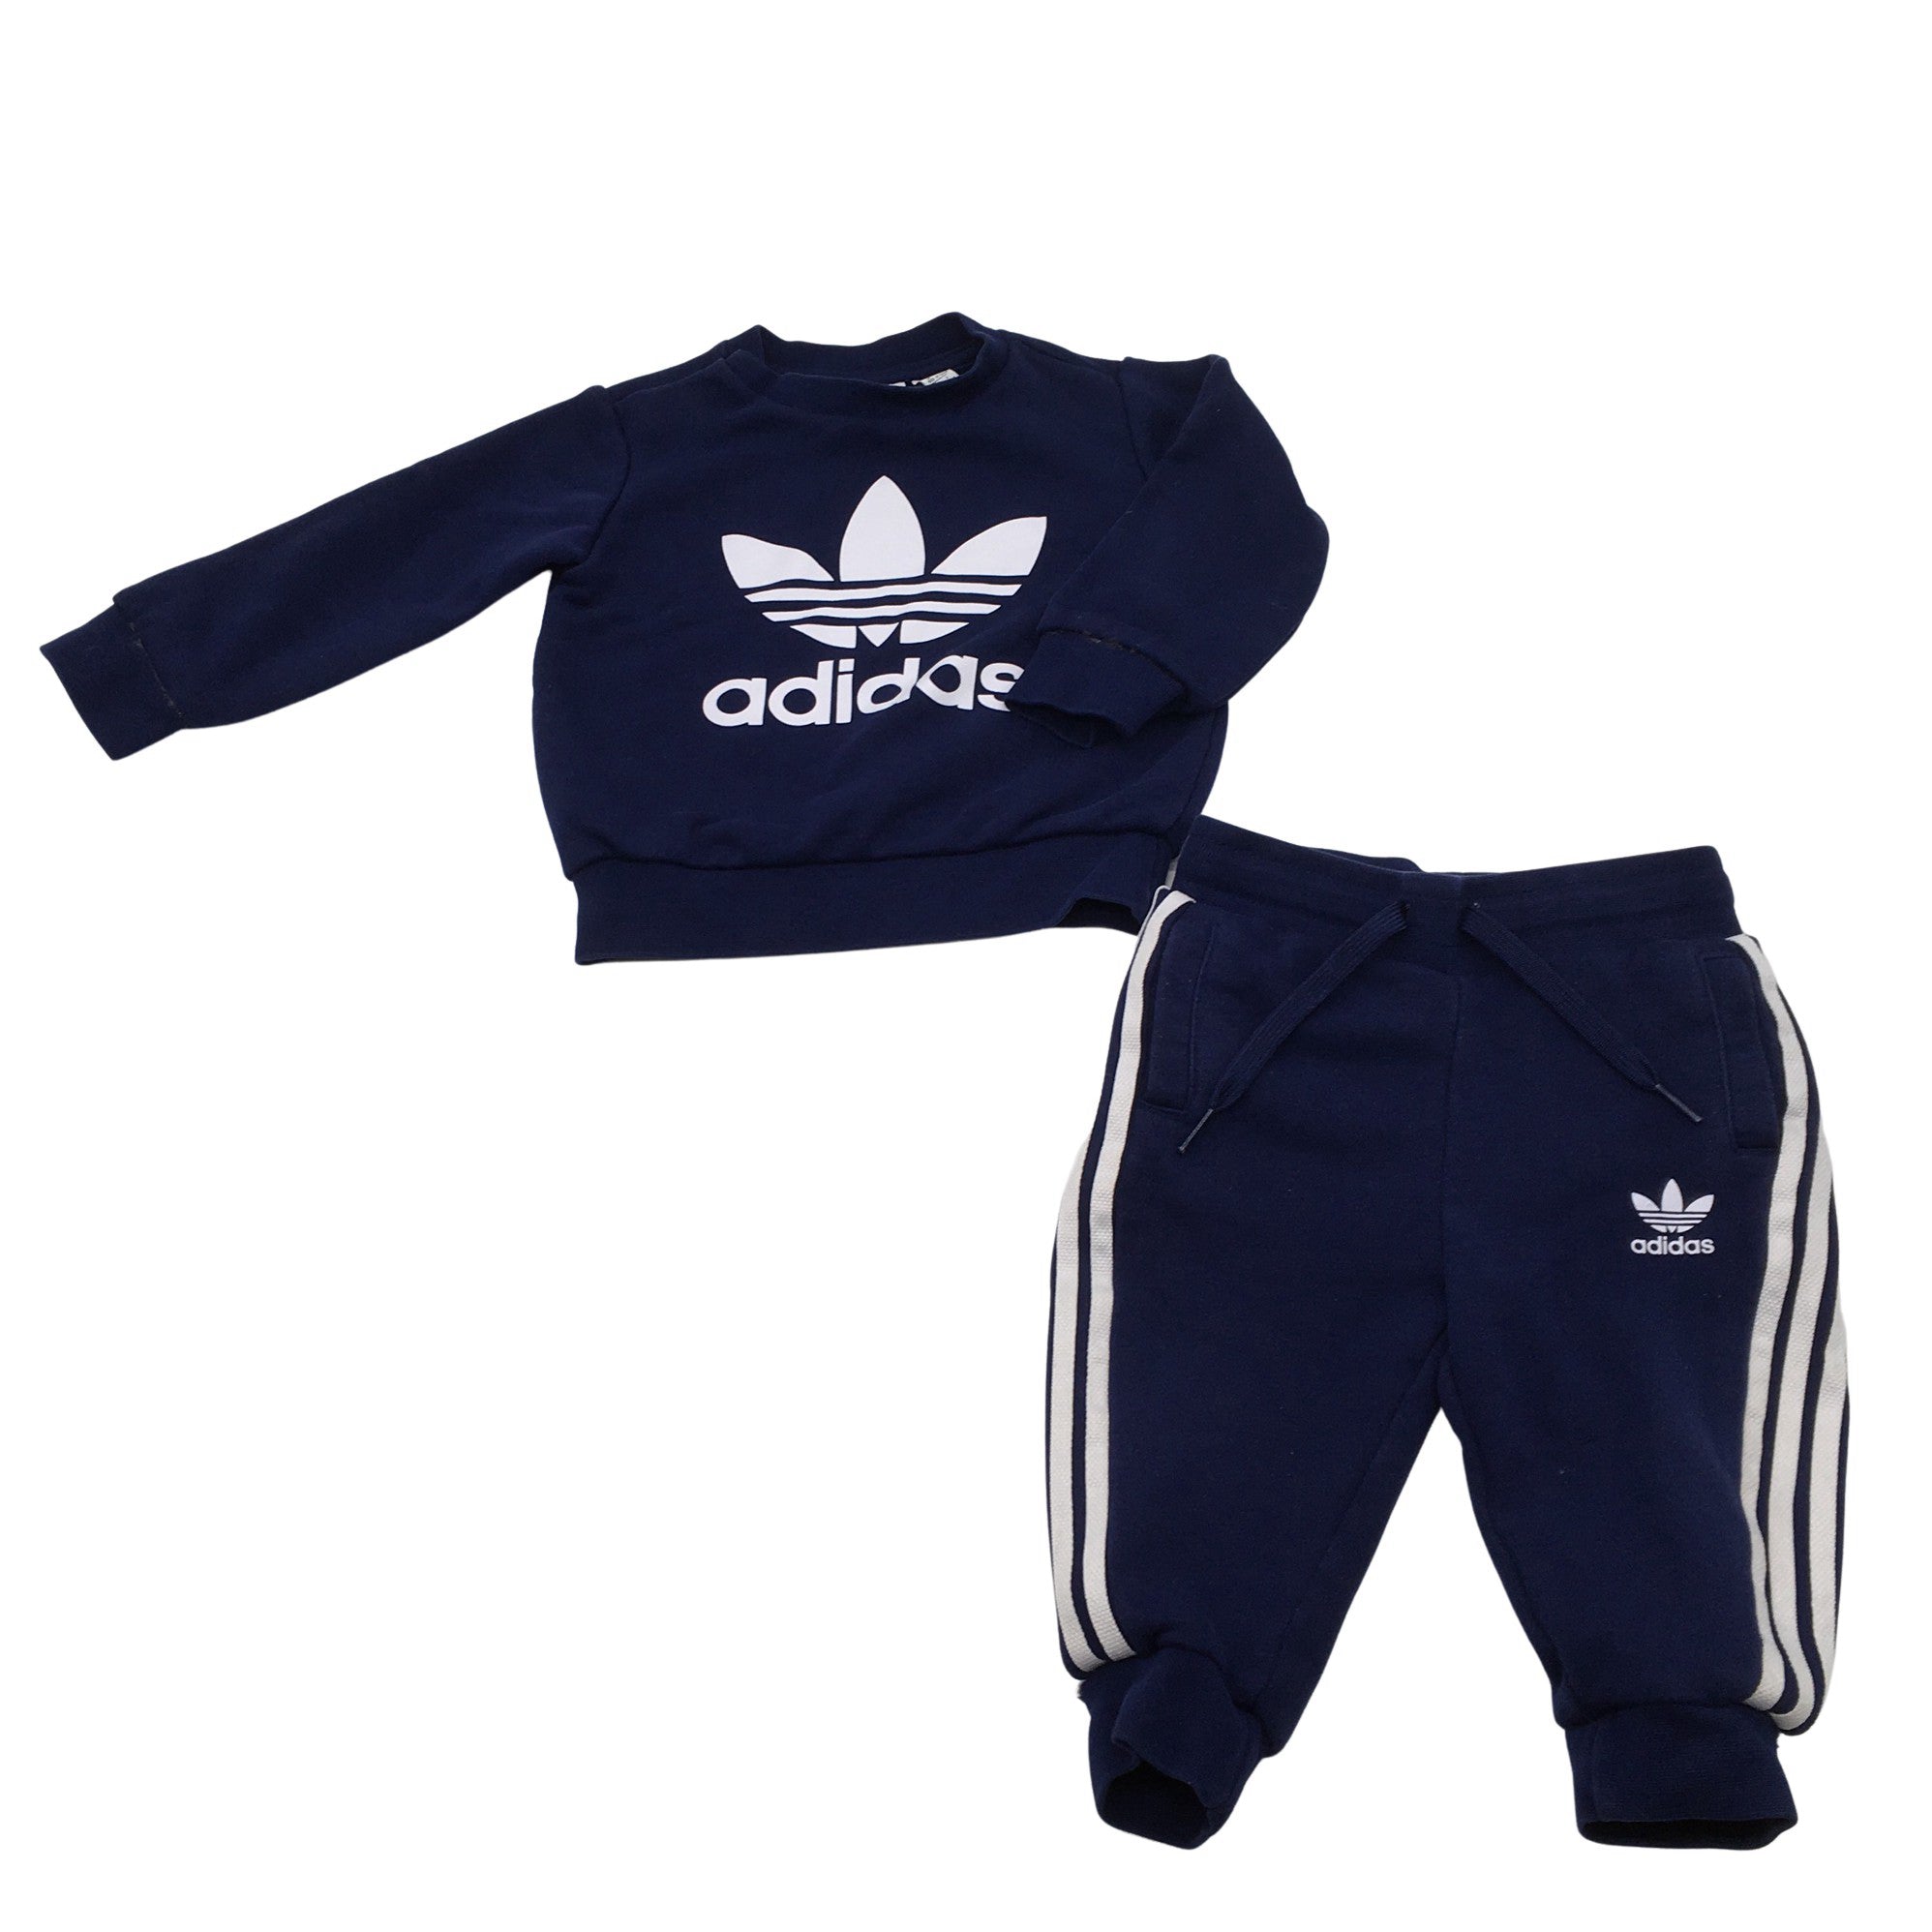 ondergronds Fjord Gepland Unisex Adidas Sweatshirt and pants set, size 74 - 80 (Blue) | Emmy